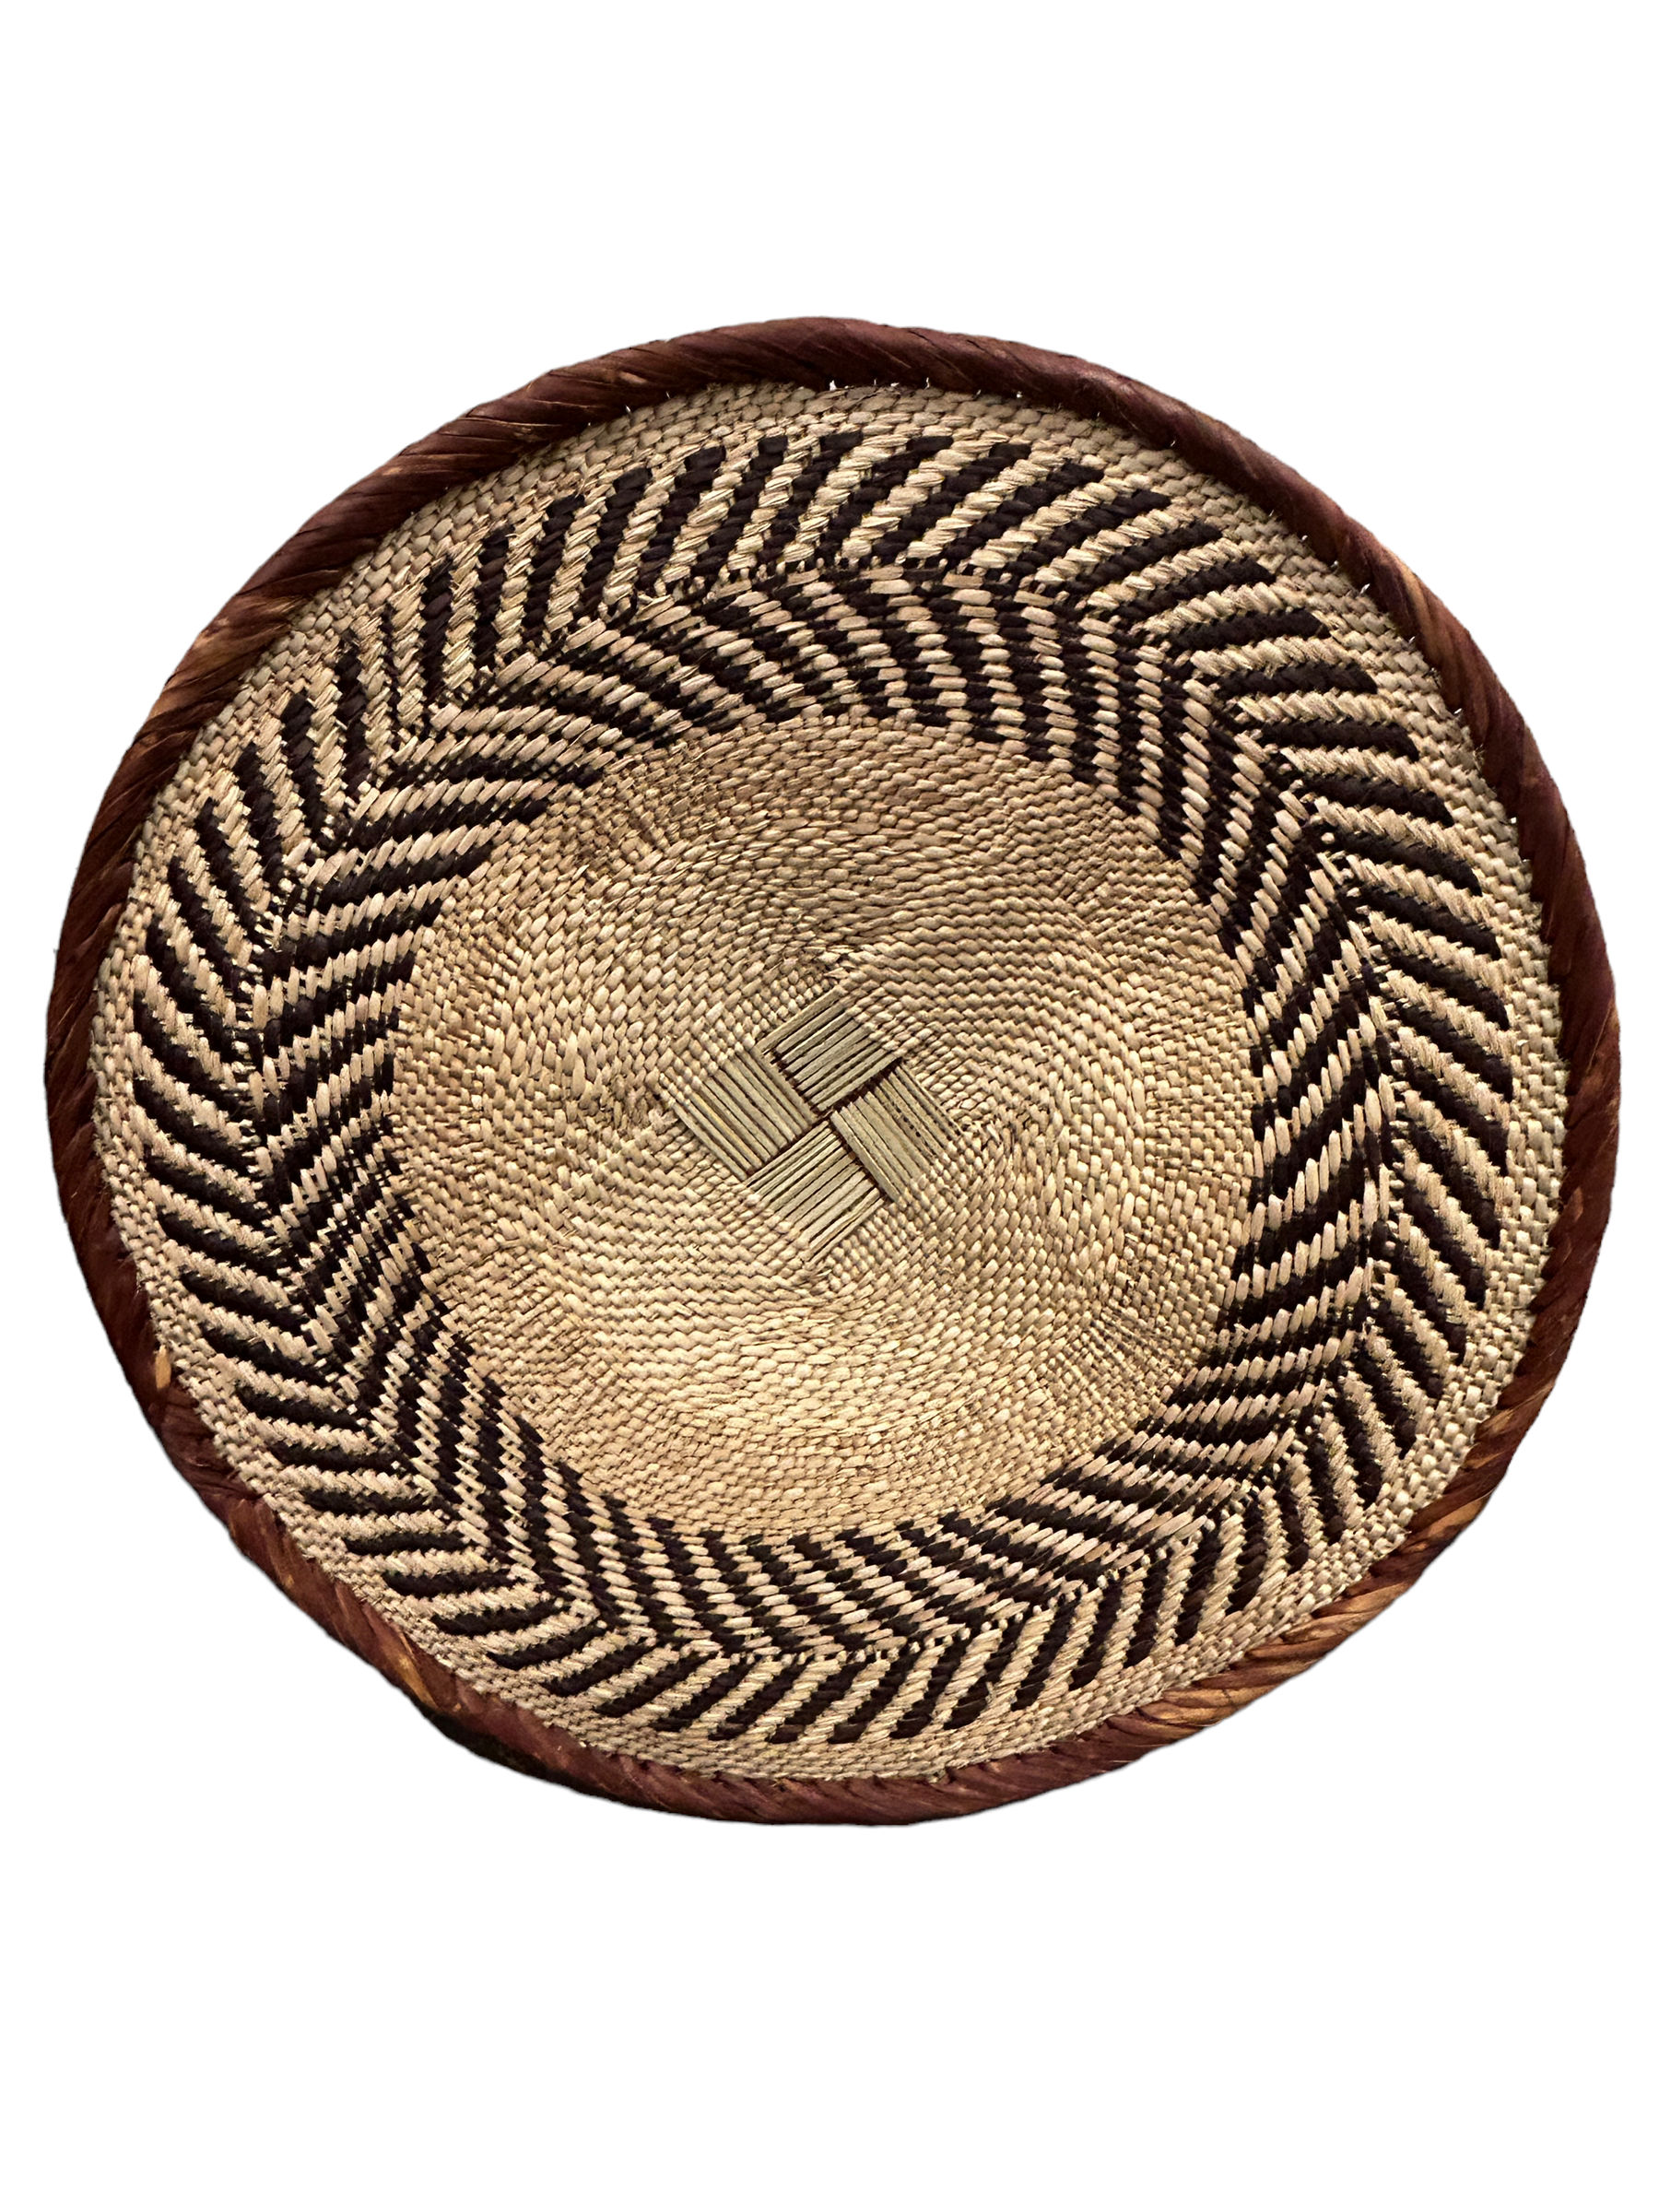 botanicalboysuk Tonga Basket Natural (50-17)